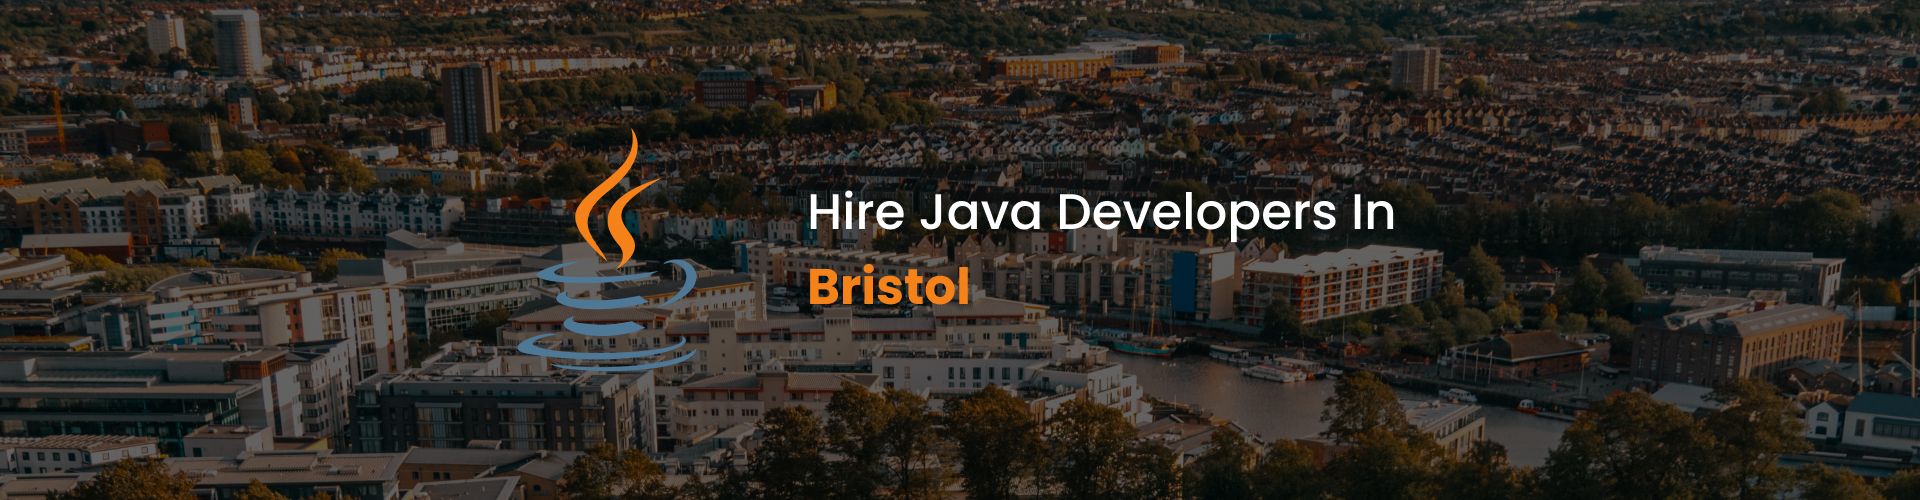 hire java developers in bristol